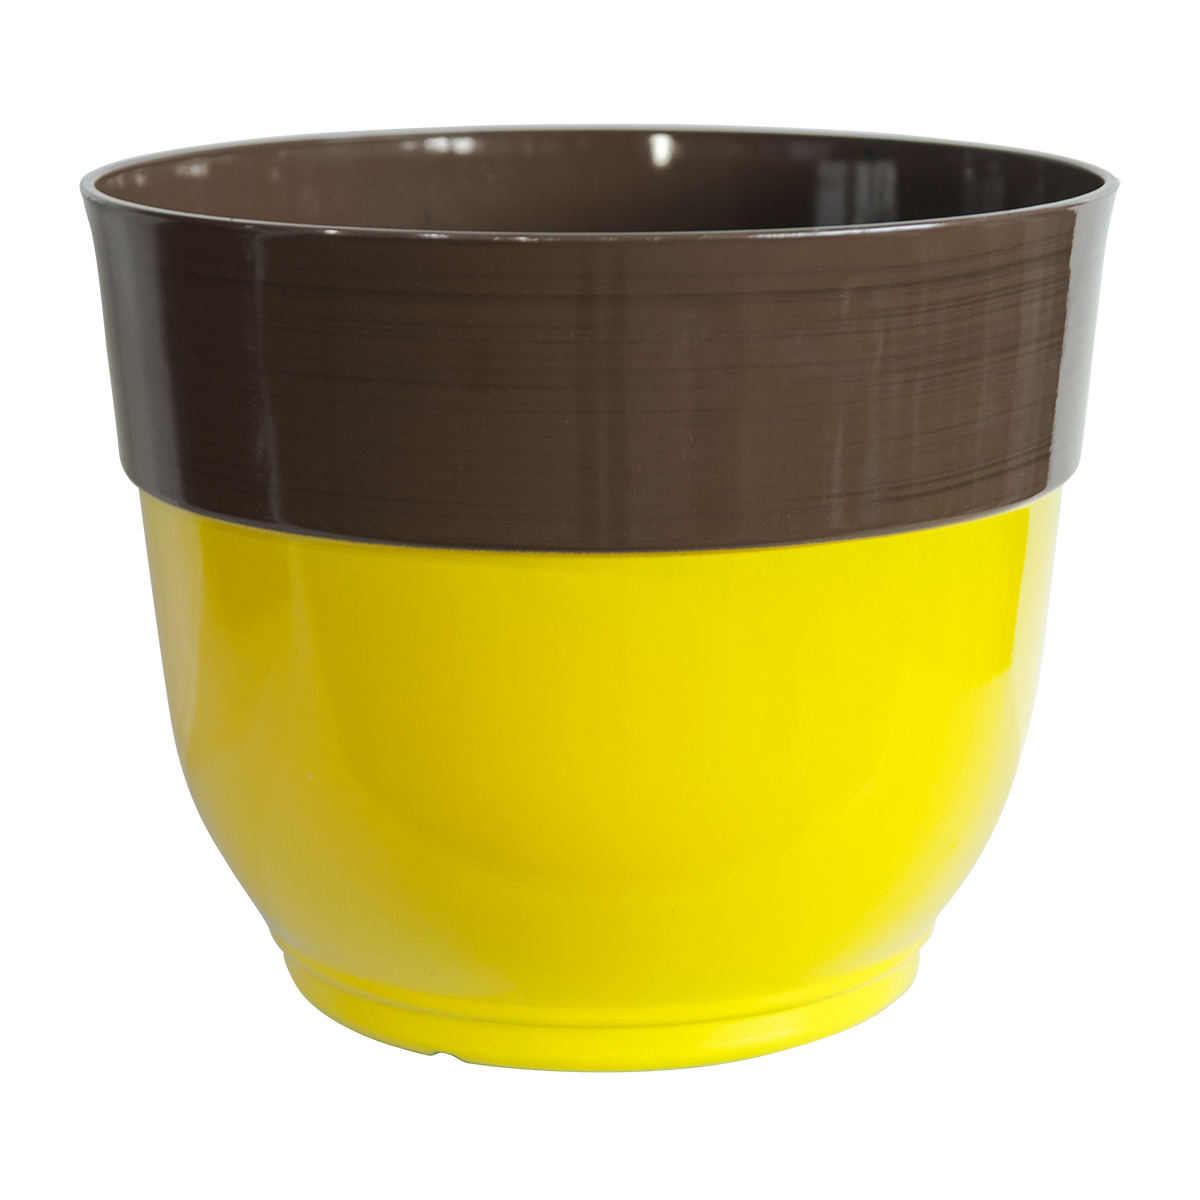 Lightweight Ceramic Look Plastic Pots for Plants